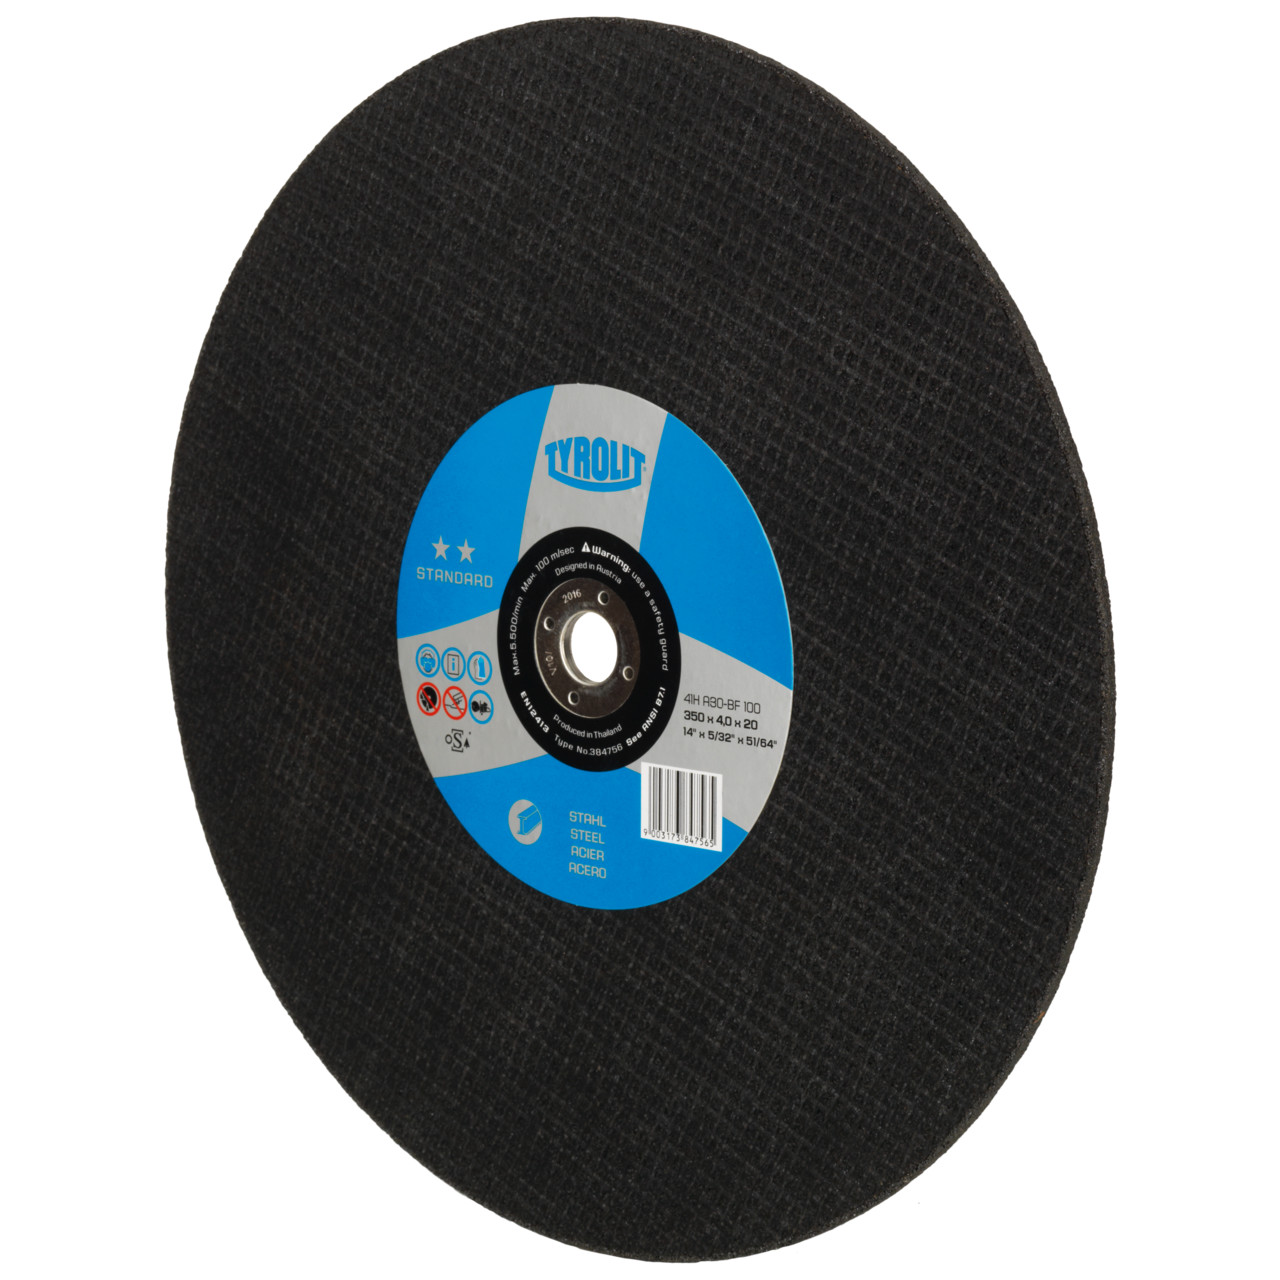 Tyrolit Cutting discs DxDxH 300x3.5x20 For steel, shape: 41 - straight version, Art. 384753